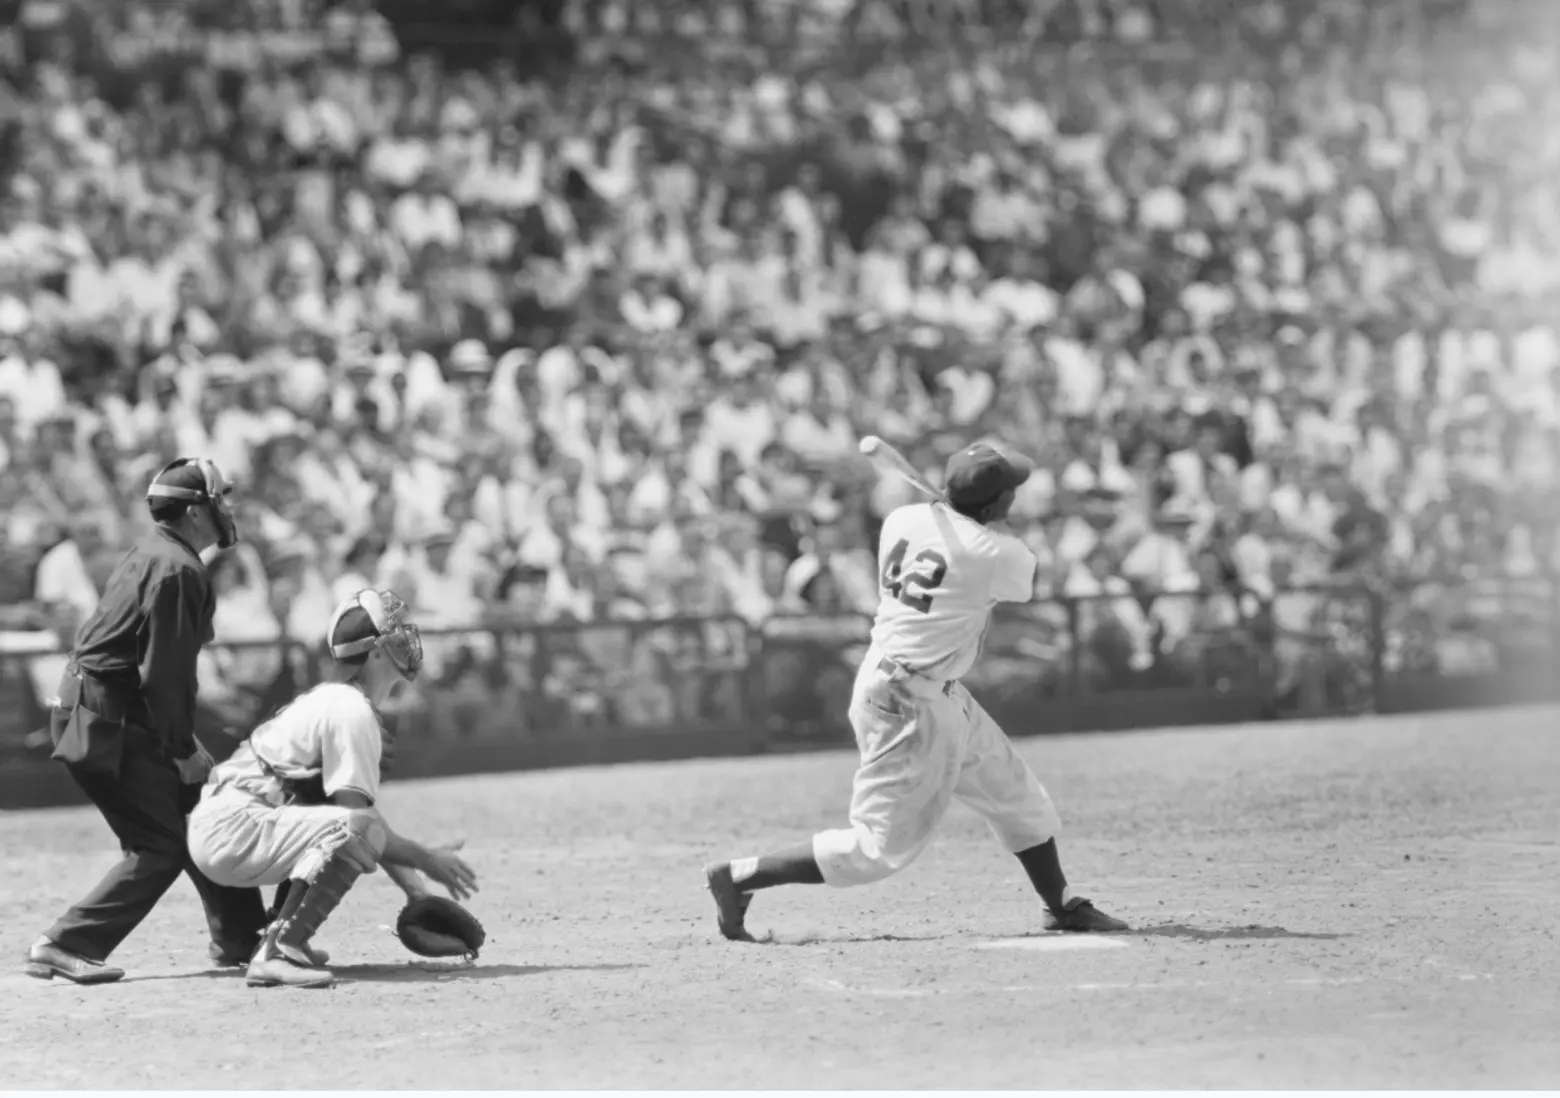 Brooklyn Dodgers Jackie Robinson 42 1955 Bank of America White